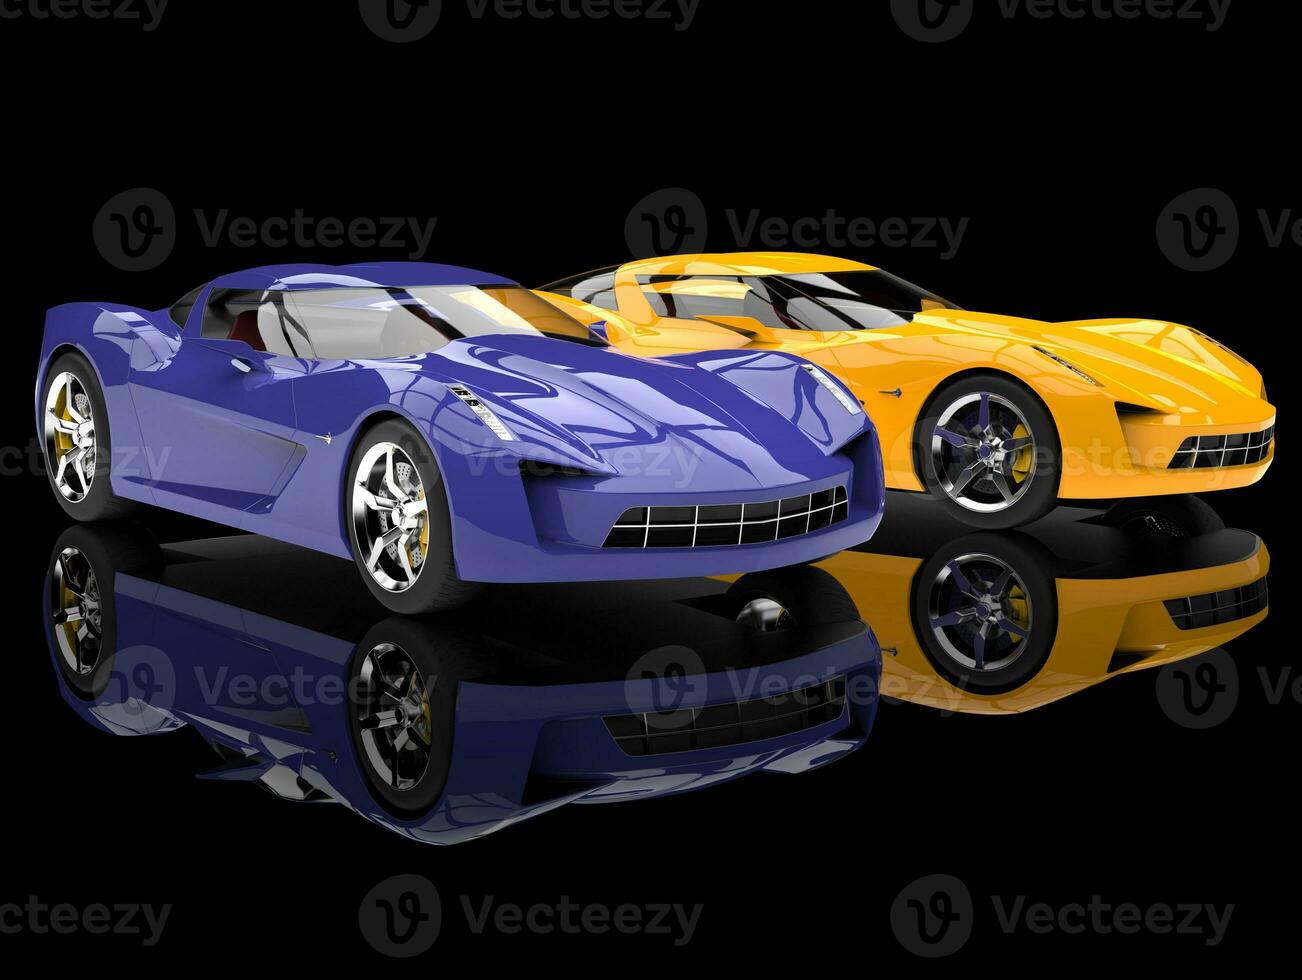 Sun yellow and crazy purple modern super sports concept cars photo